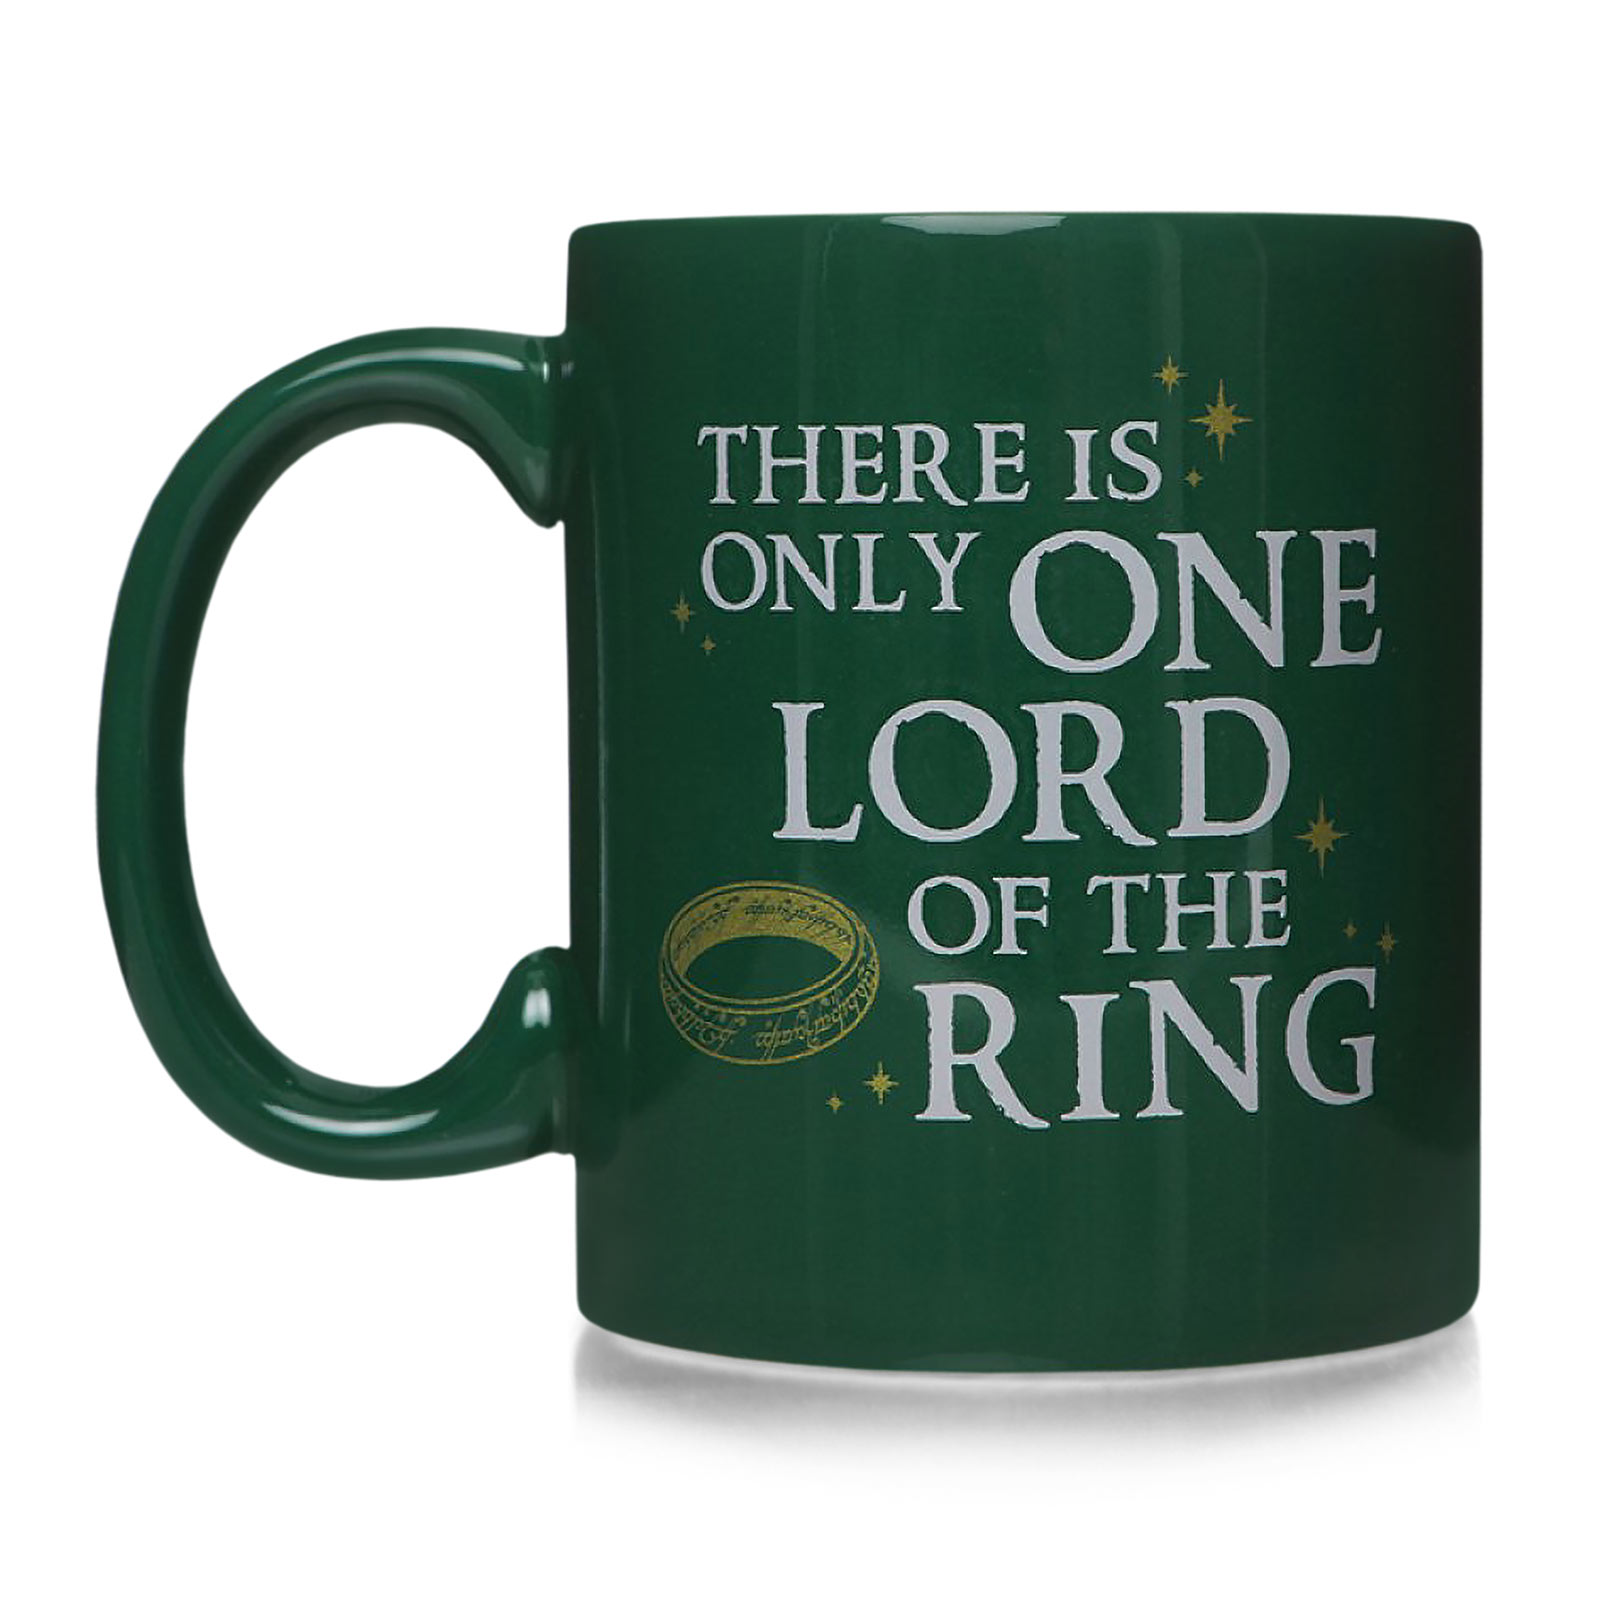 Herr der Ringe - Only One Lord of the Ring Tasse